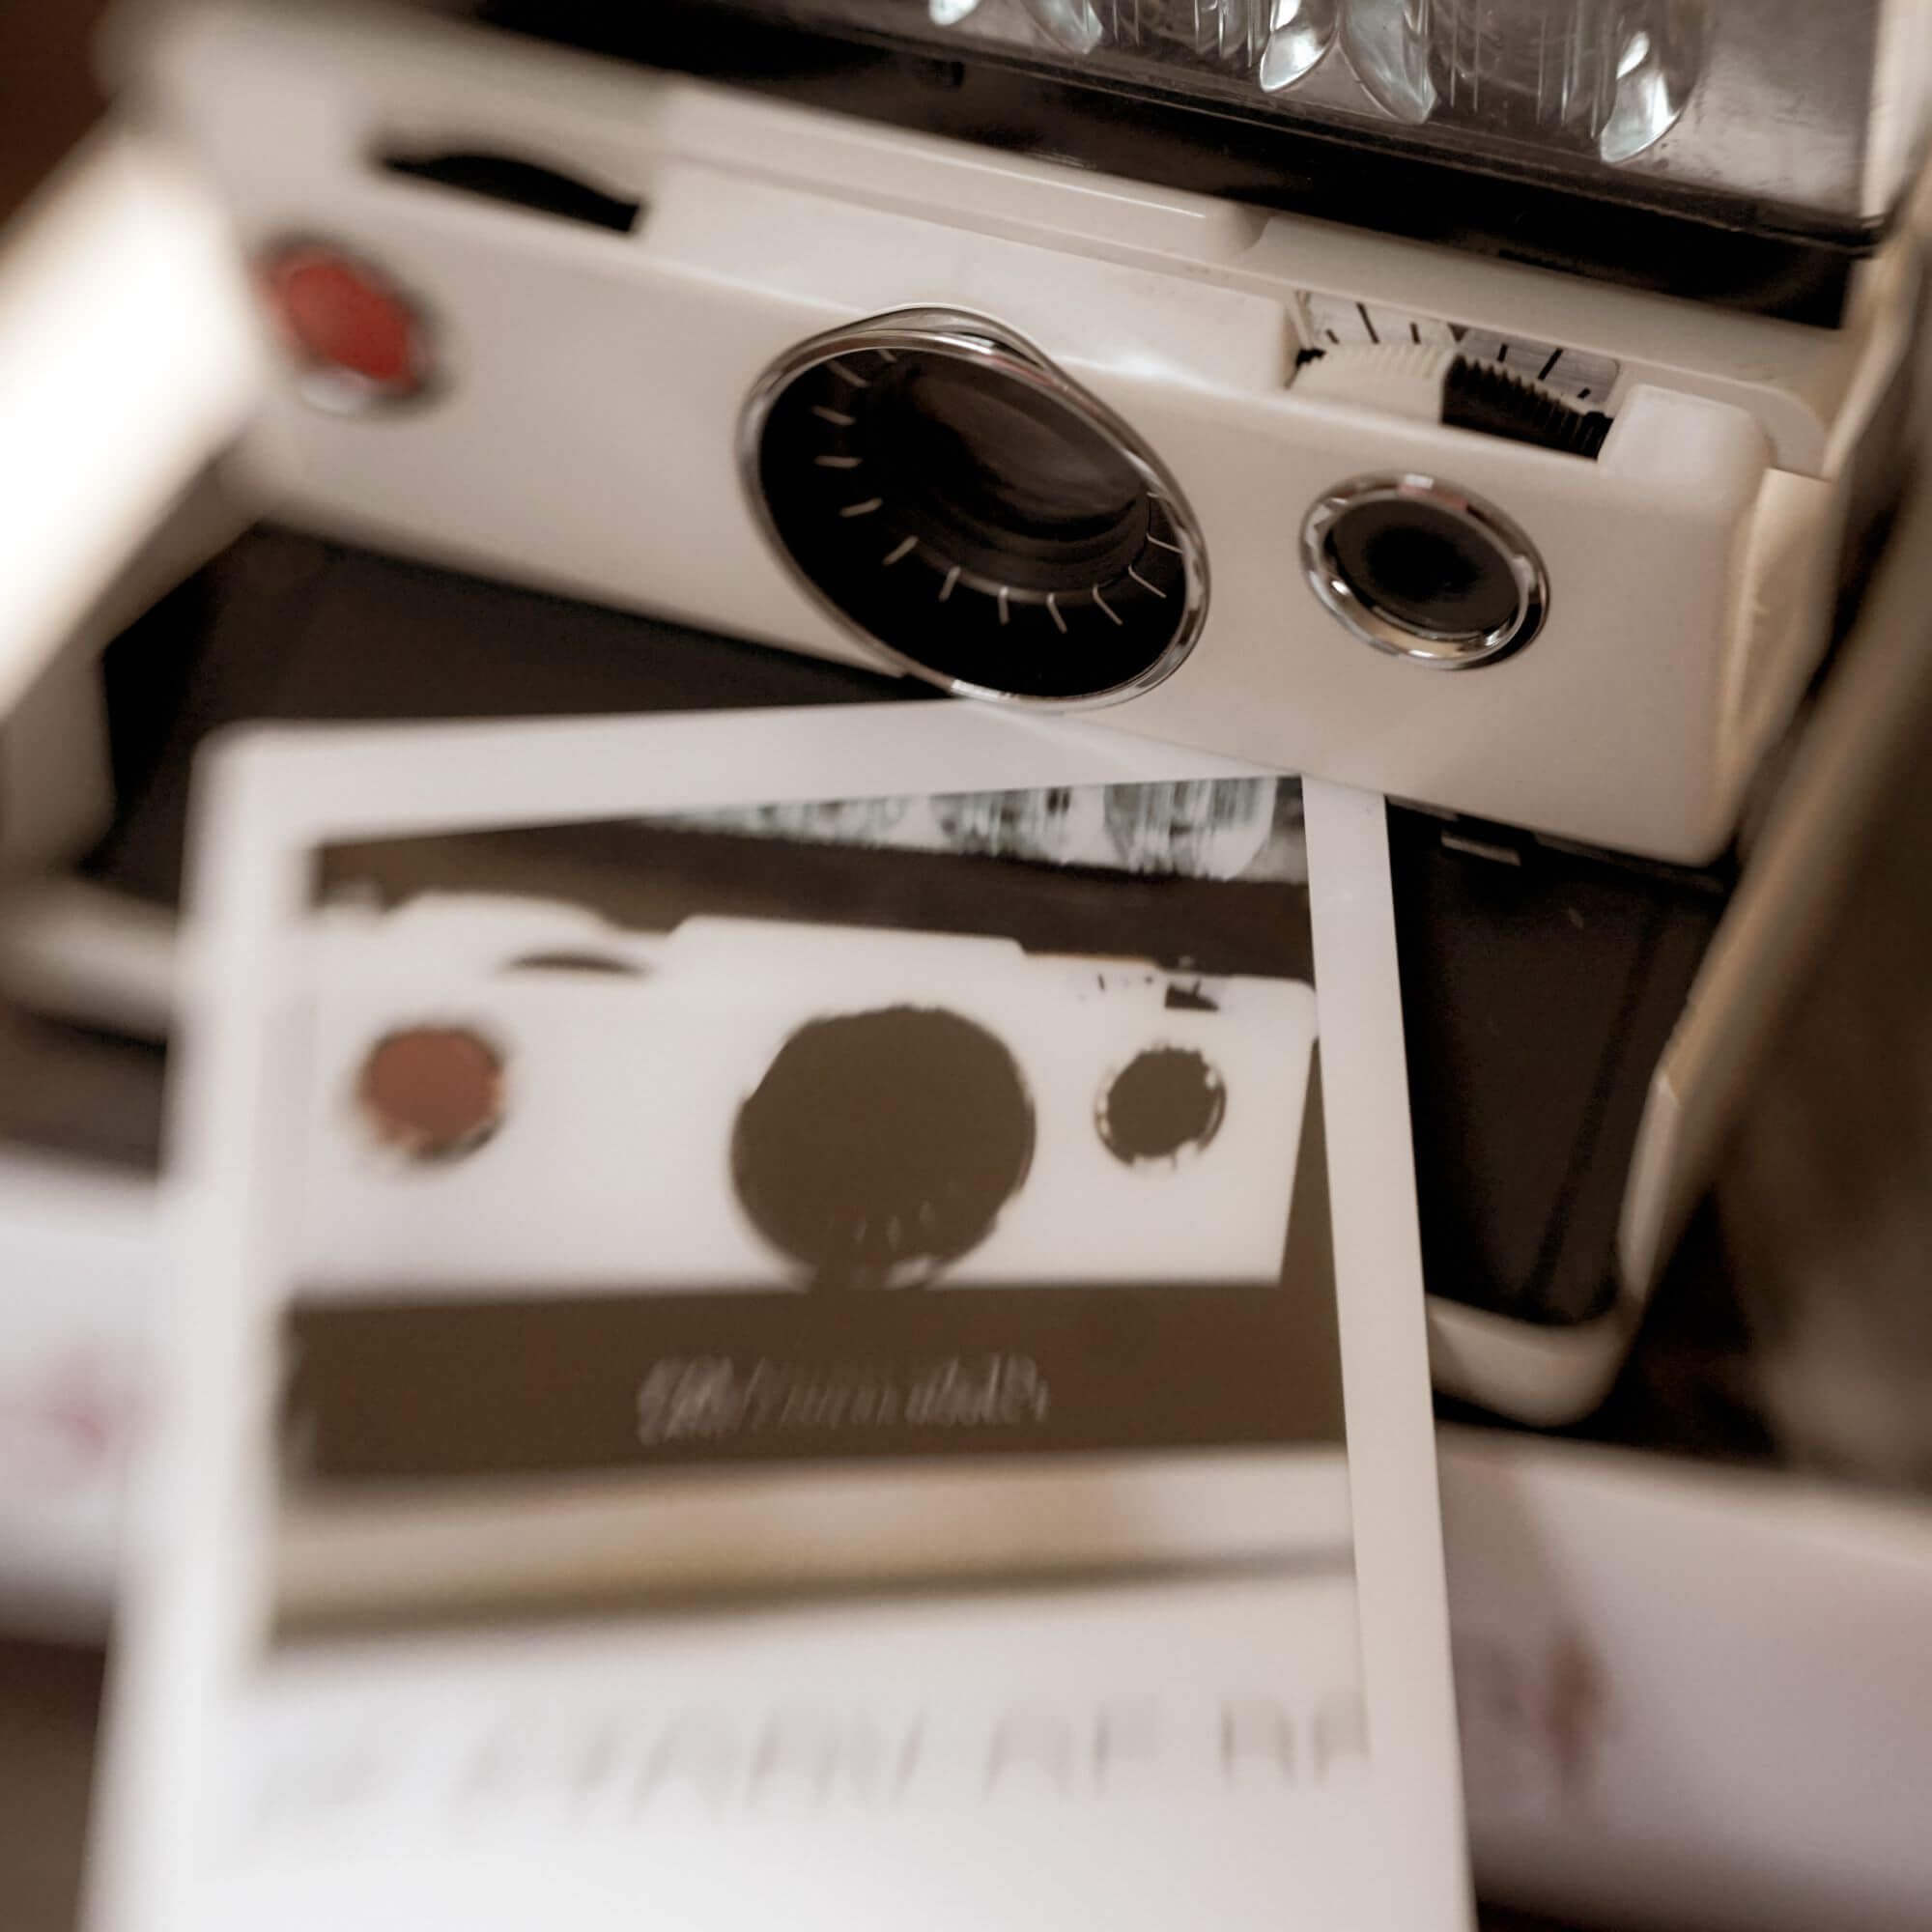 sx 70 polaroid camera and film